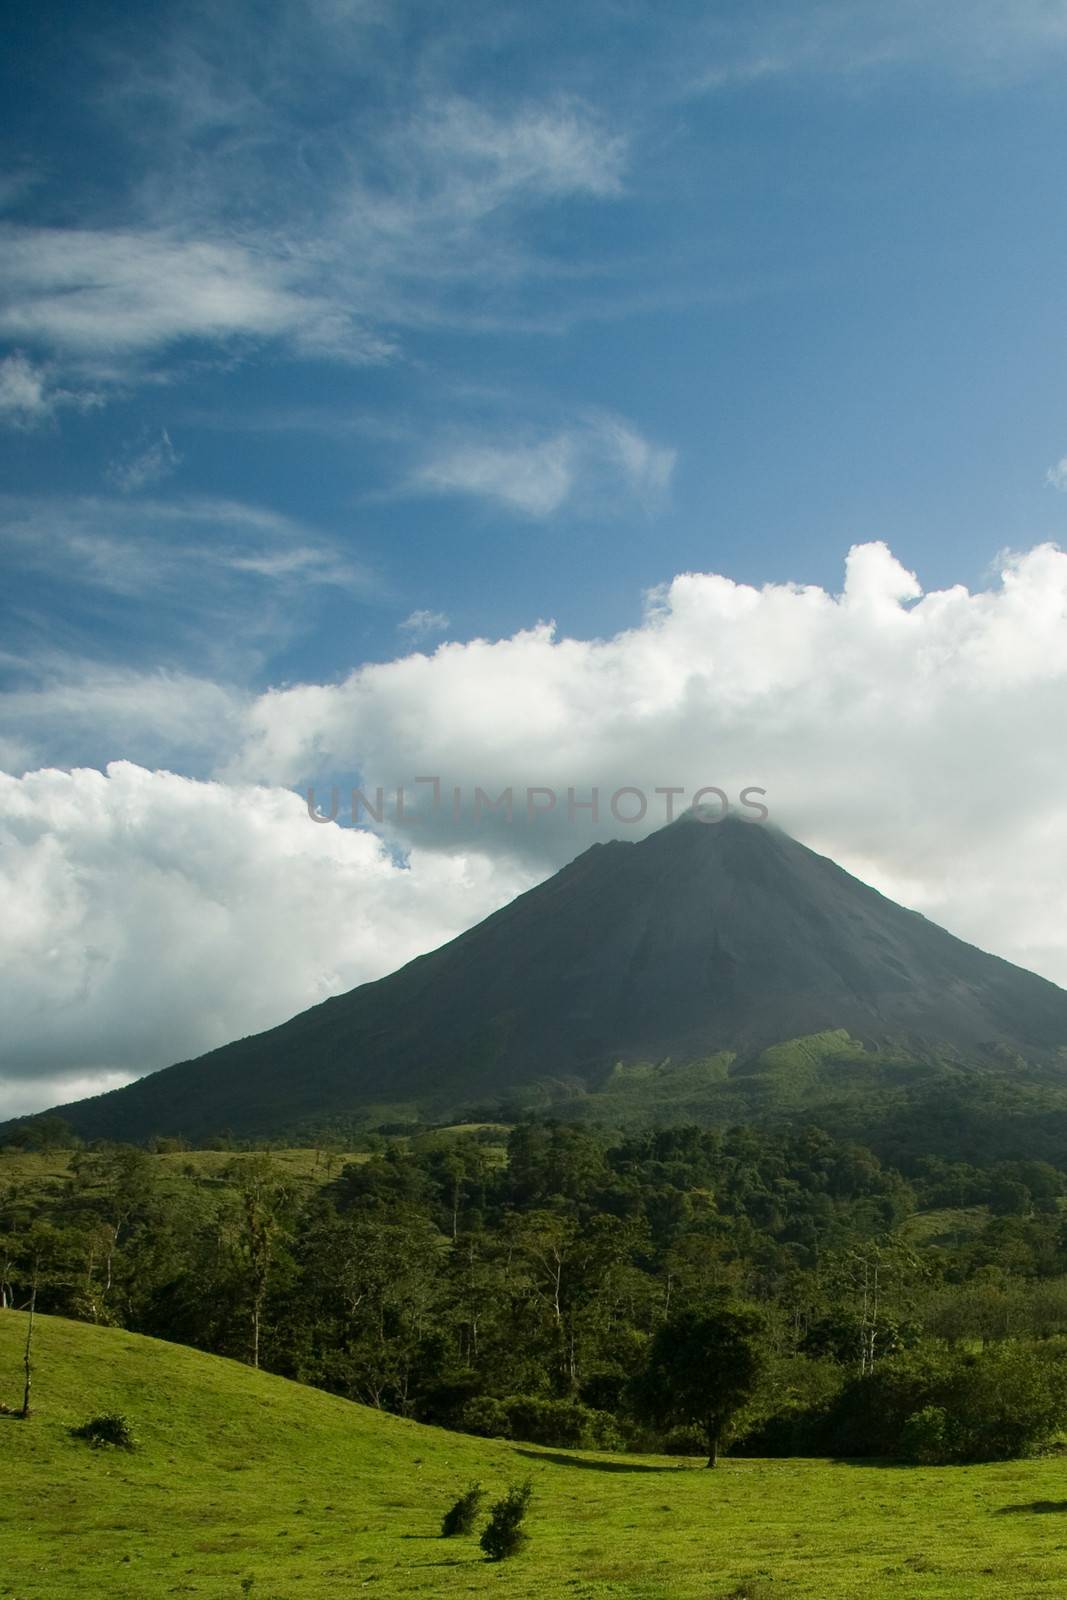 Arenal volcano in Costa Rica by CelsoDiniz